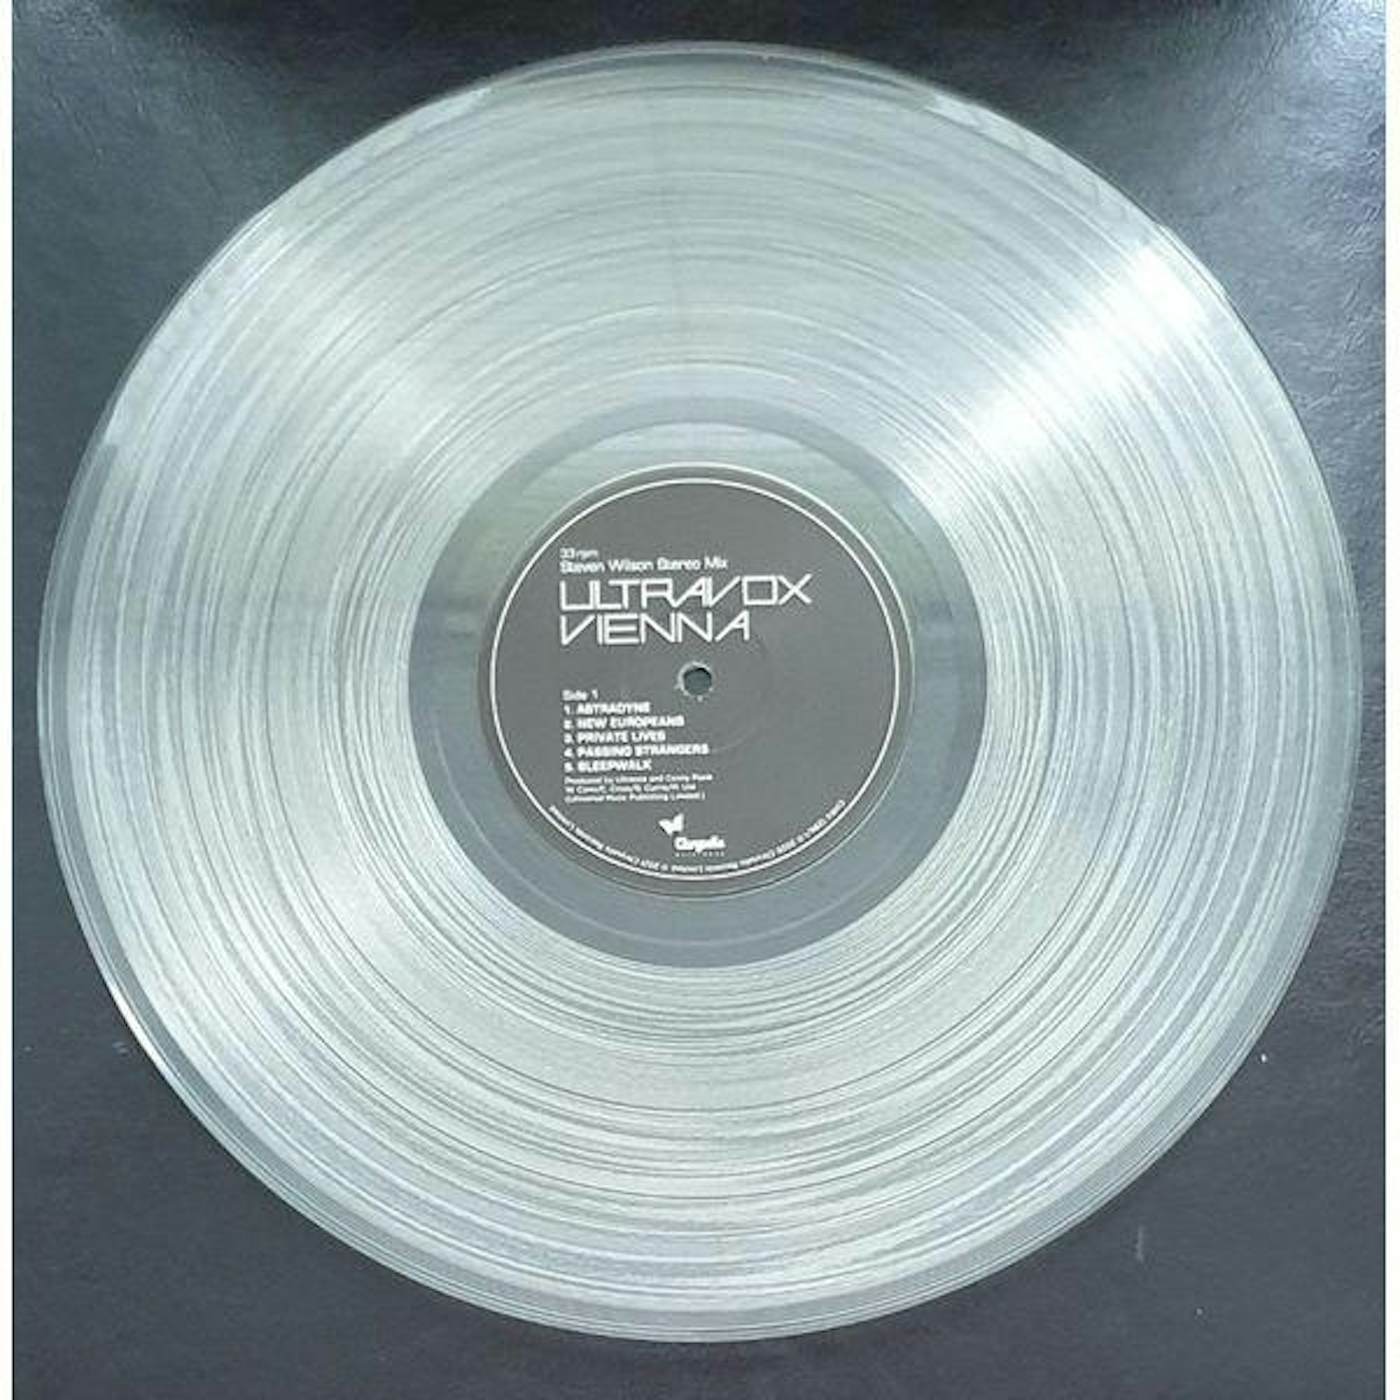 Ultravox Vienna [Steven Wilson Stereo Mix] Vinyl Record